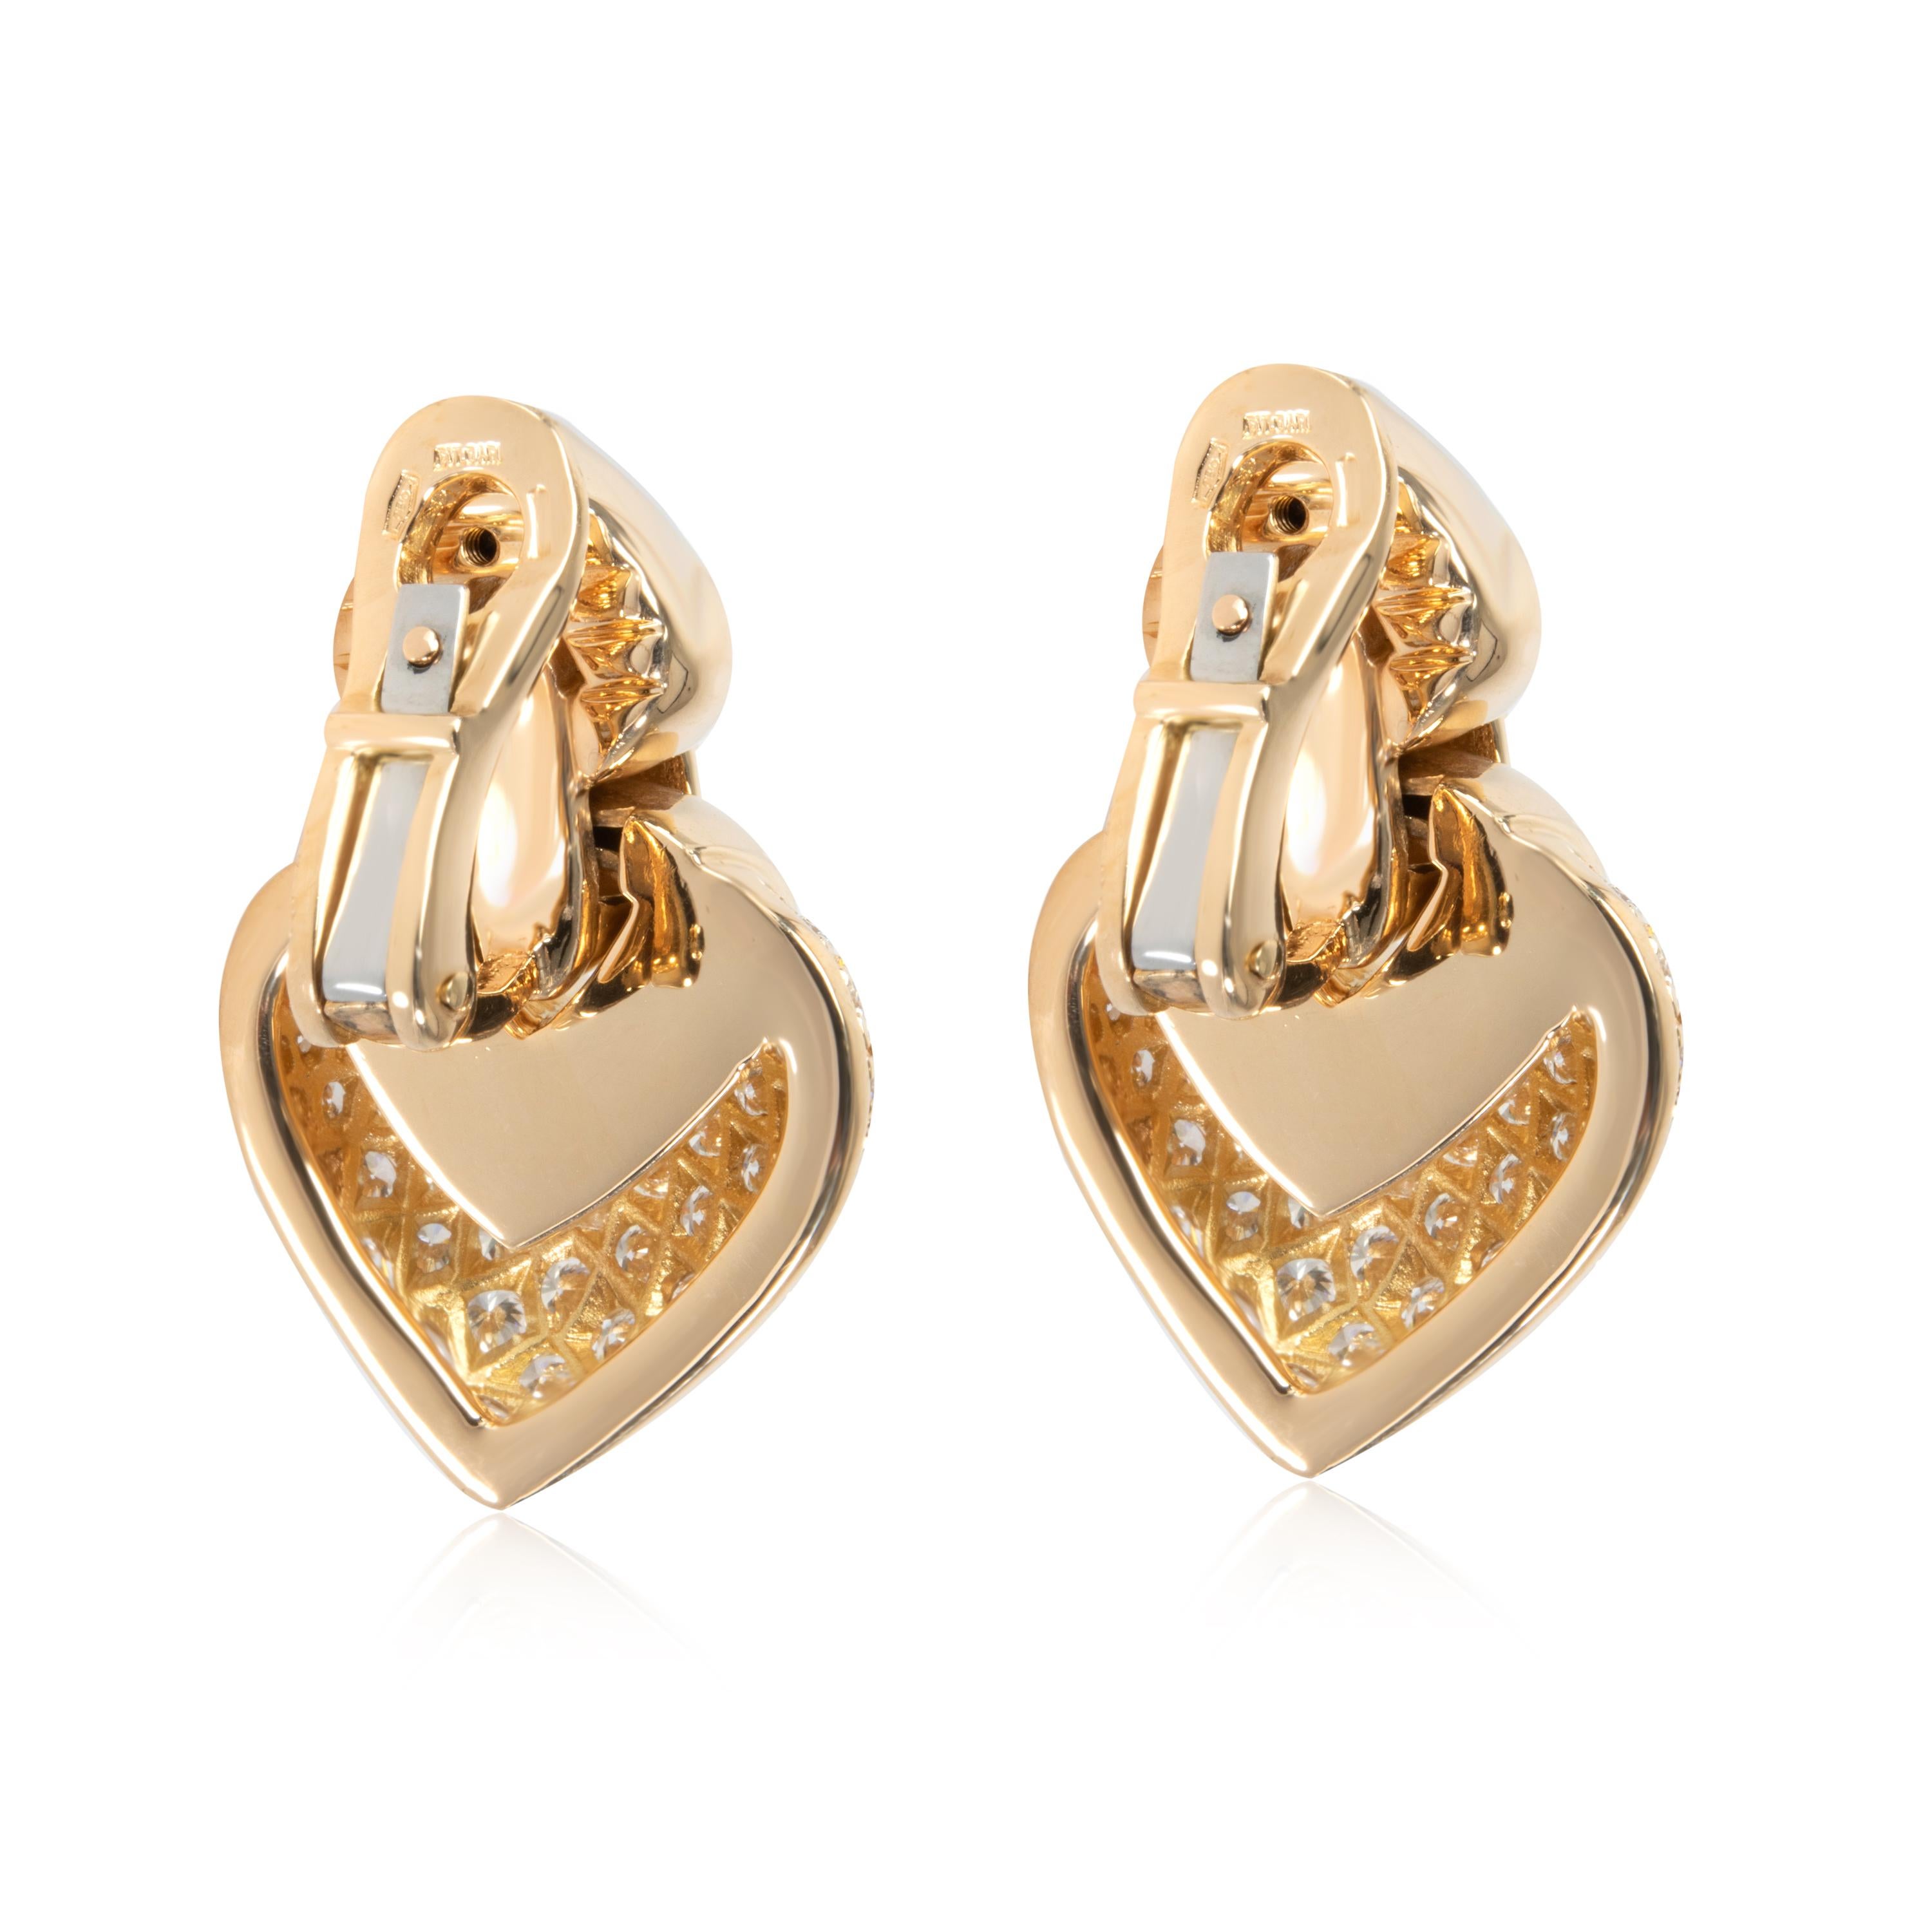 Modern Bulgari Doppio Cuore Diamond Earrings in 18 Karat Yellow Gold 3.00 Carat